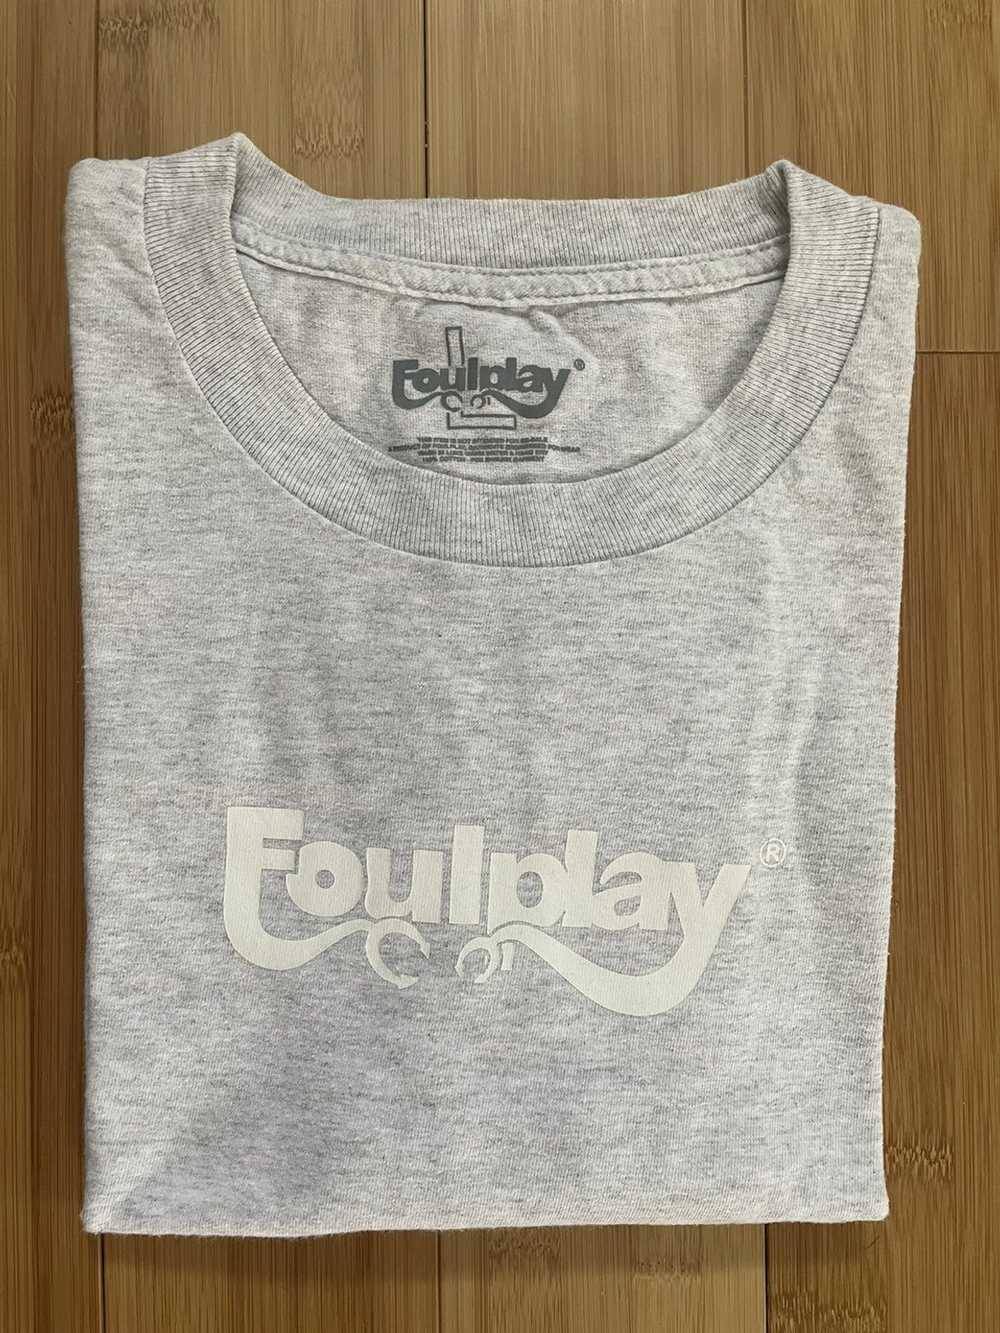 Foulplay Company Foulplay shirt - image 1